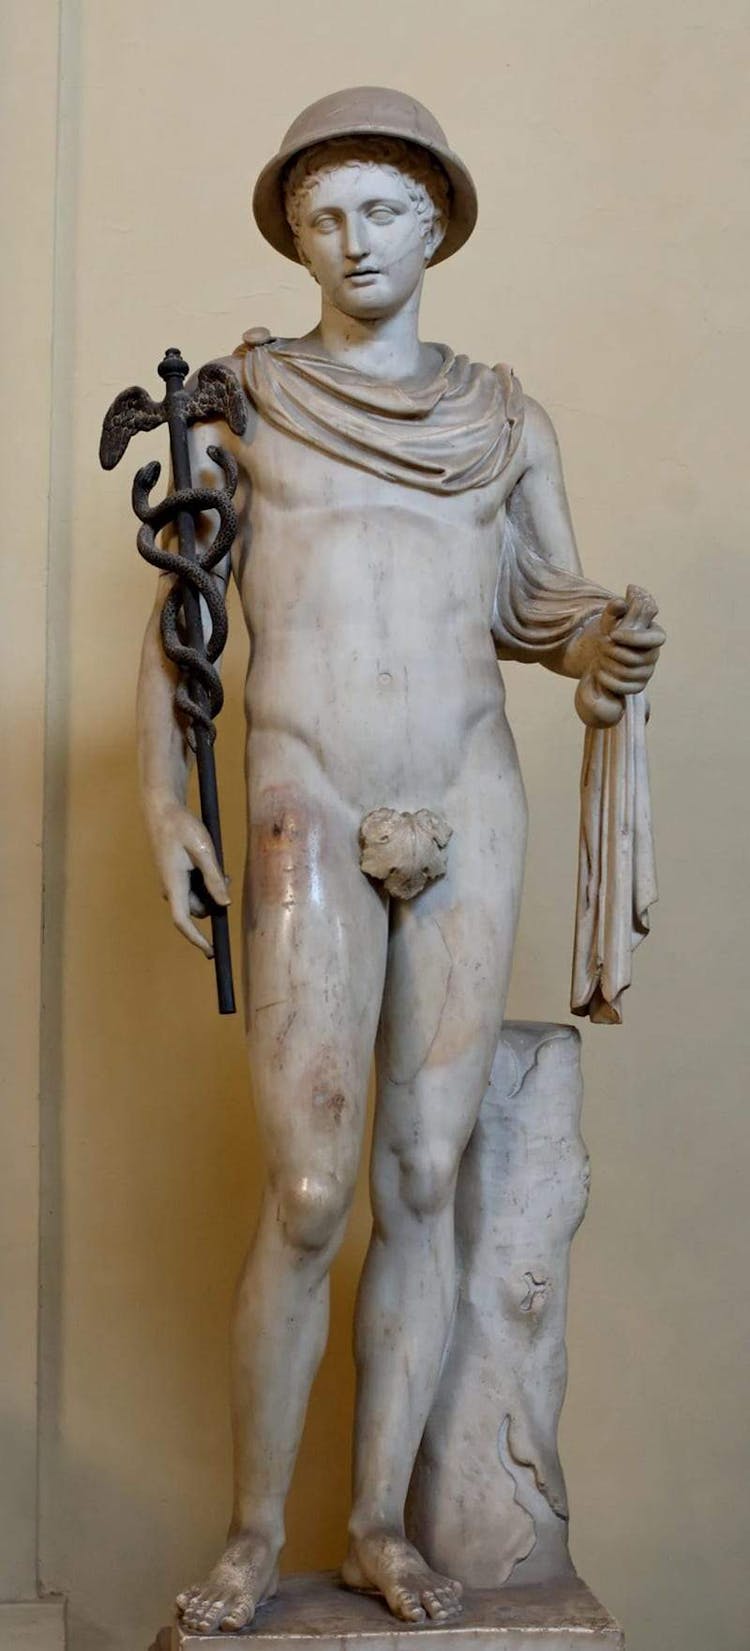 An ancient statue of Hermes, god of commerce, merchants and travelers, Roman copy after a Greek original, Vatican Museum